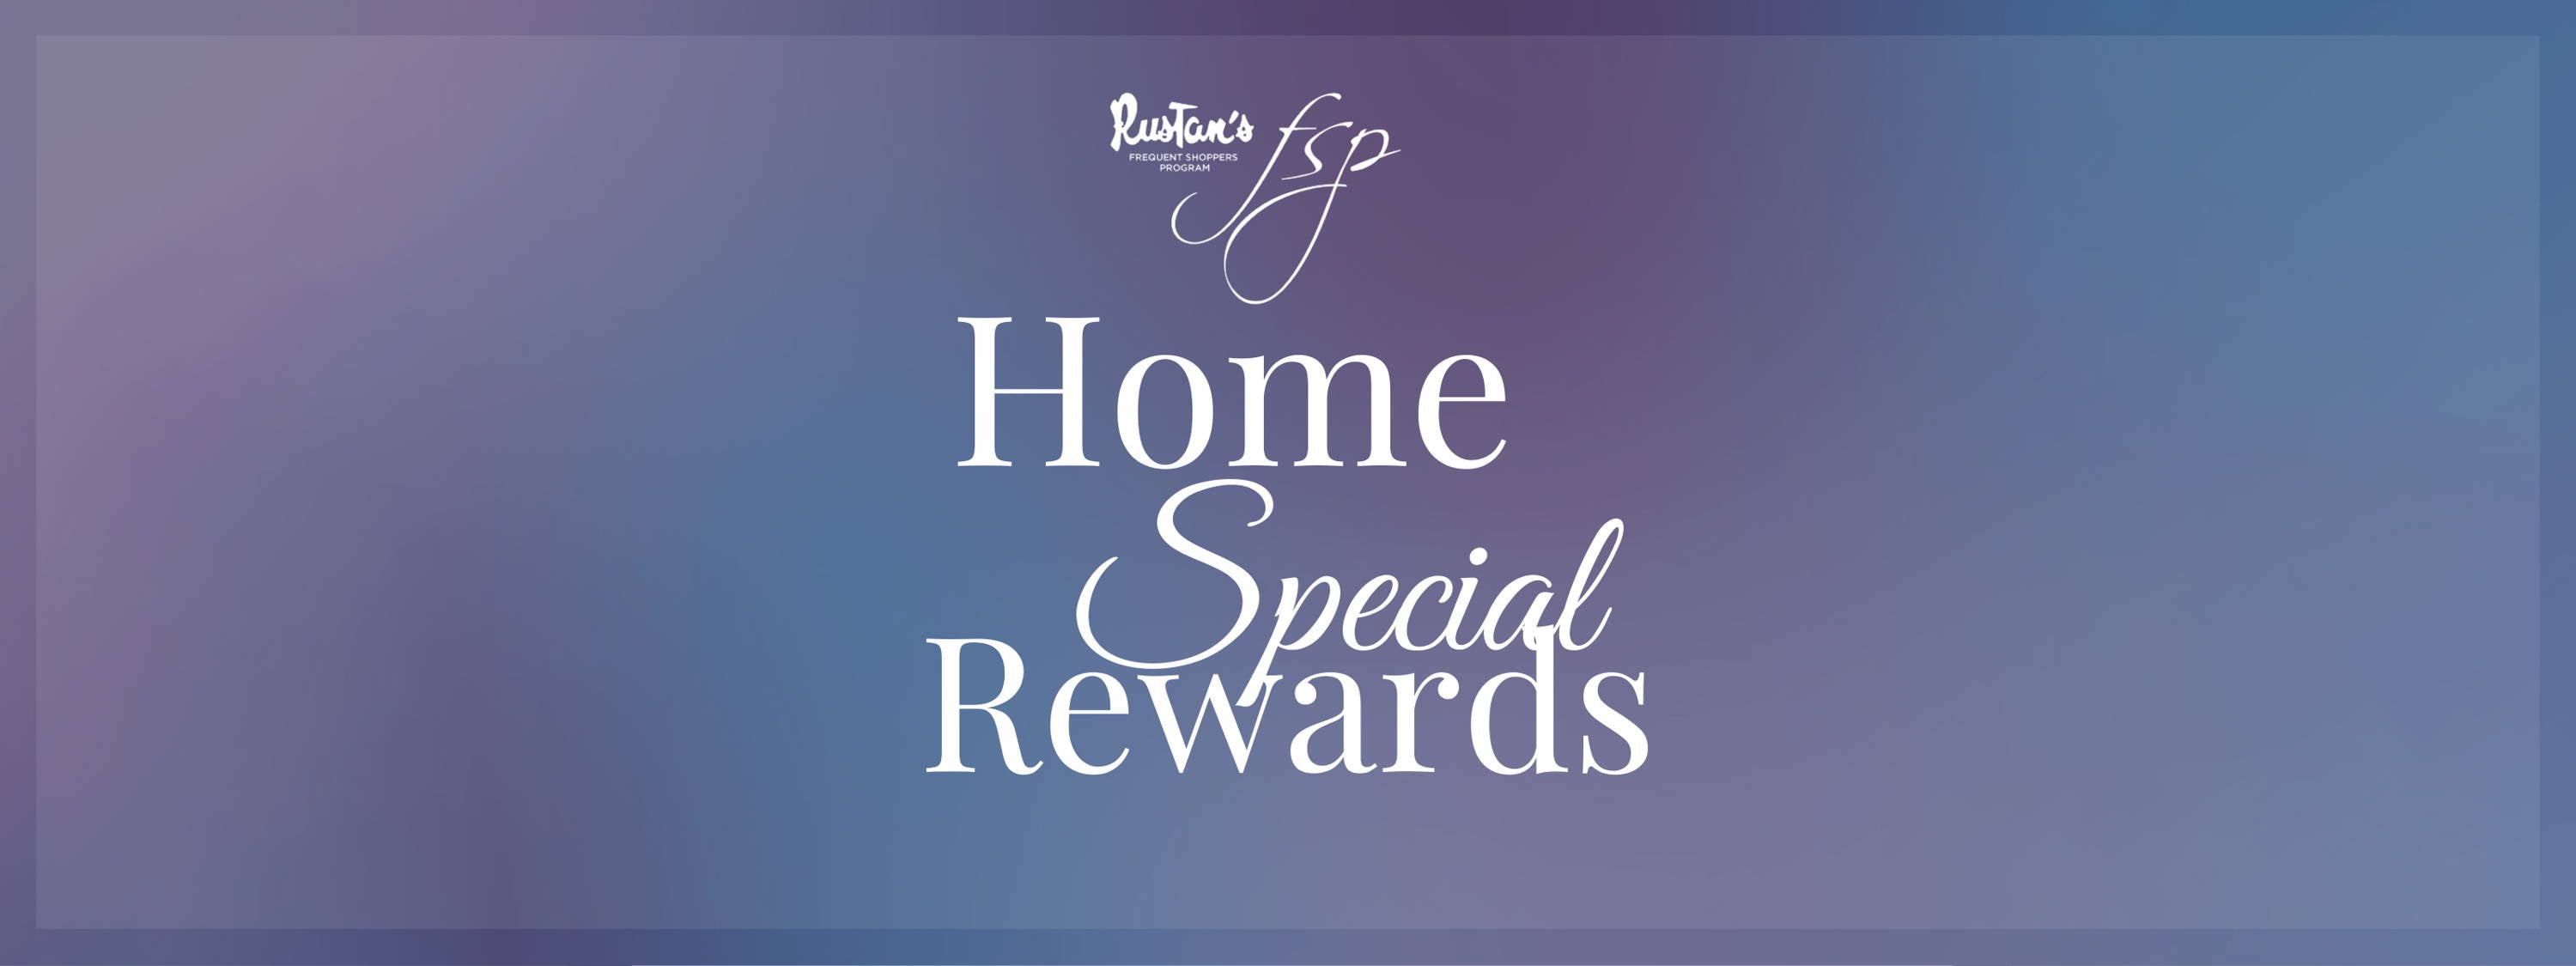 Rustan's FSP Home Special Rewards